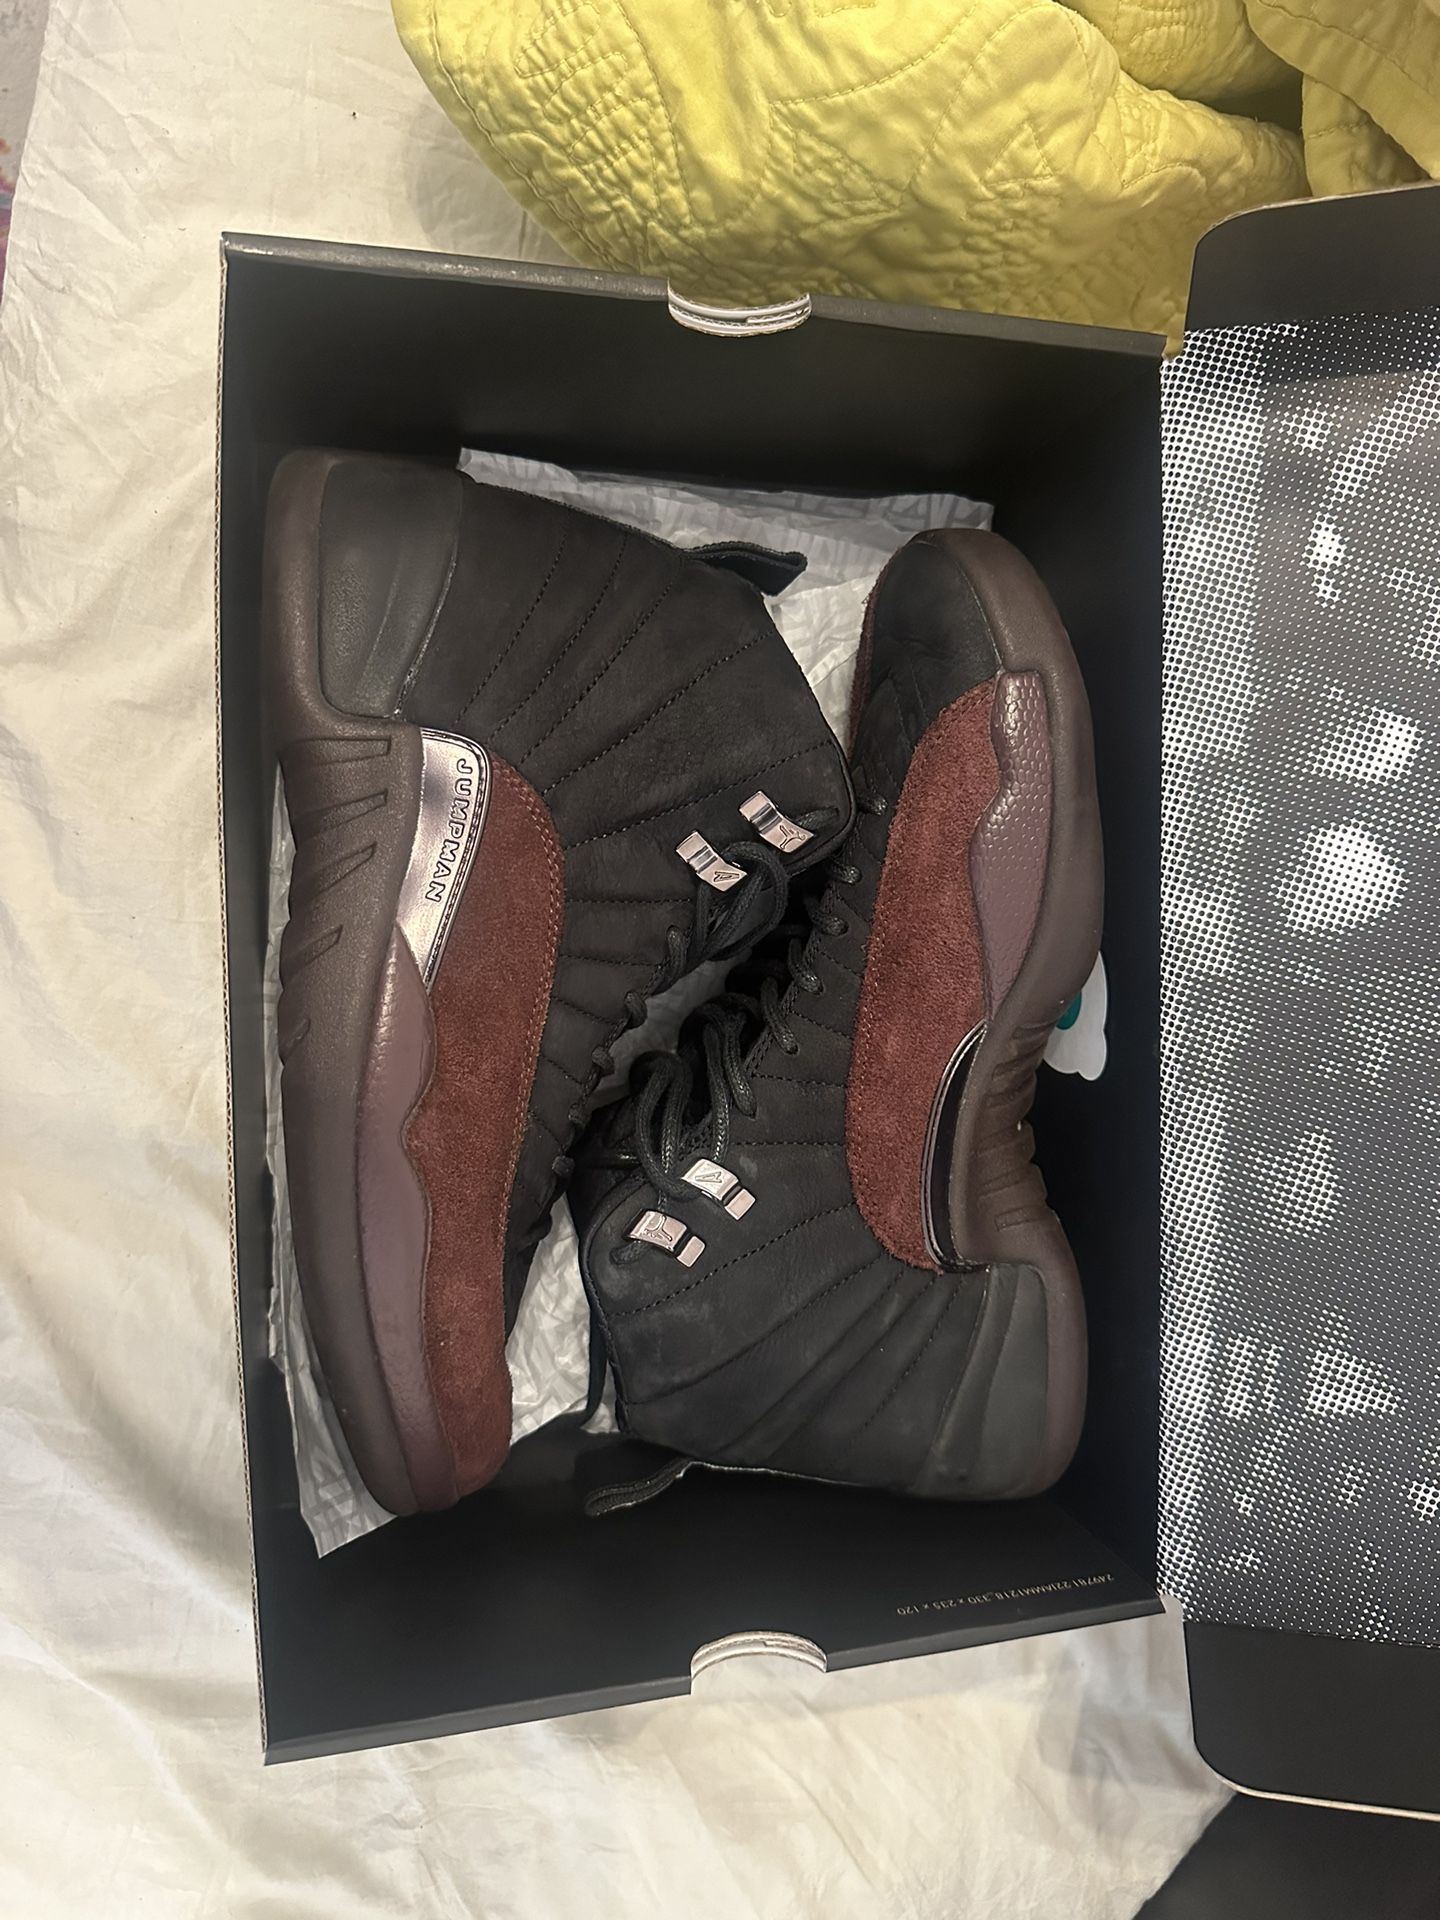 Steal On Jordan’s Both Size 9.5 